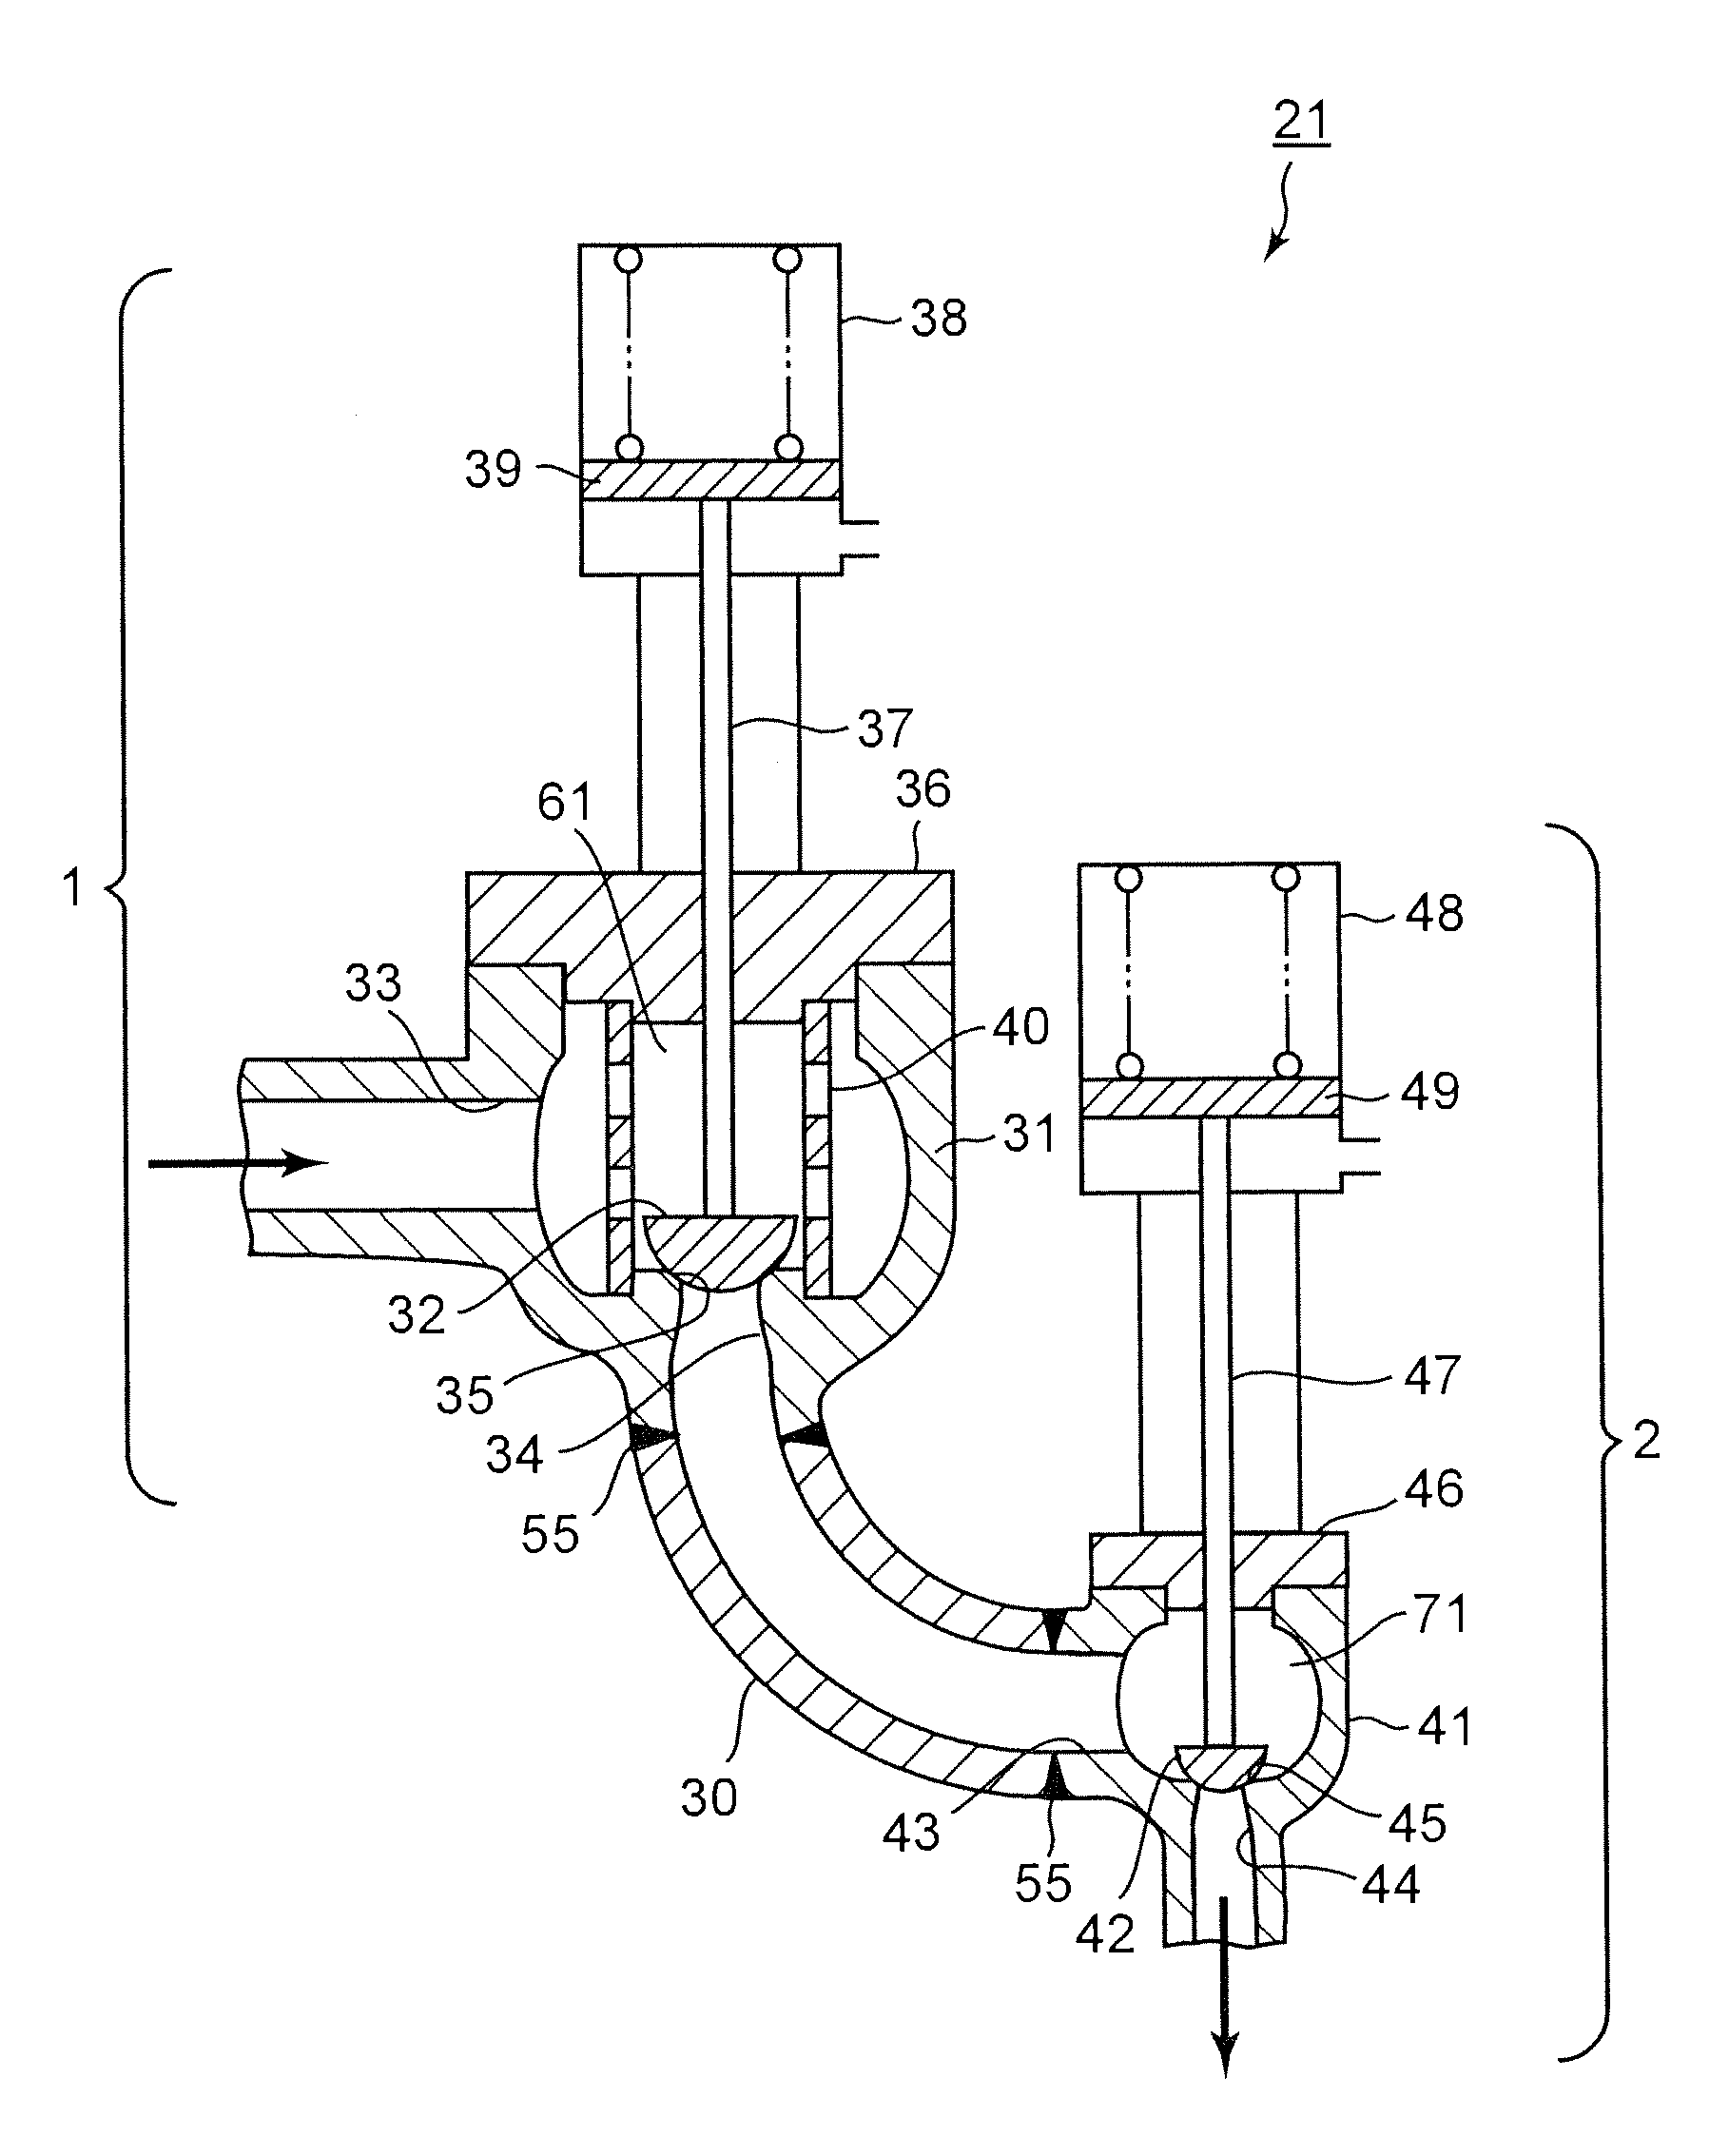 Steam valve assembly and steam turbine plant